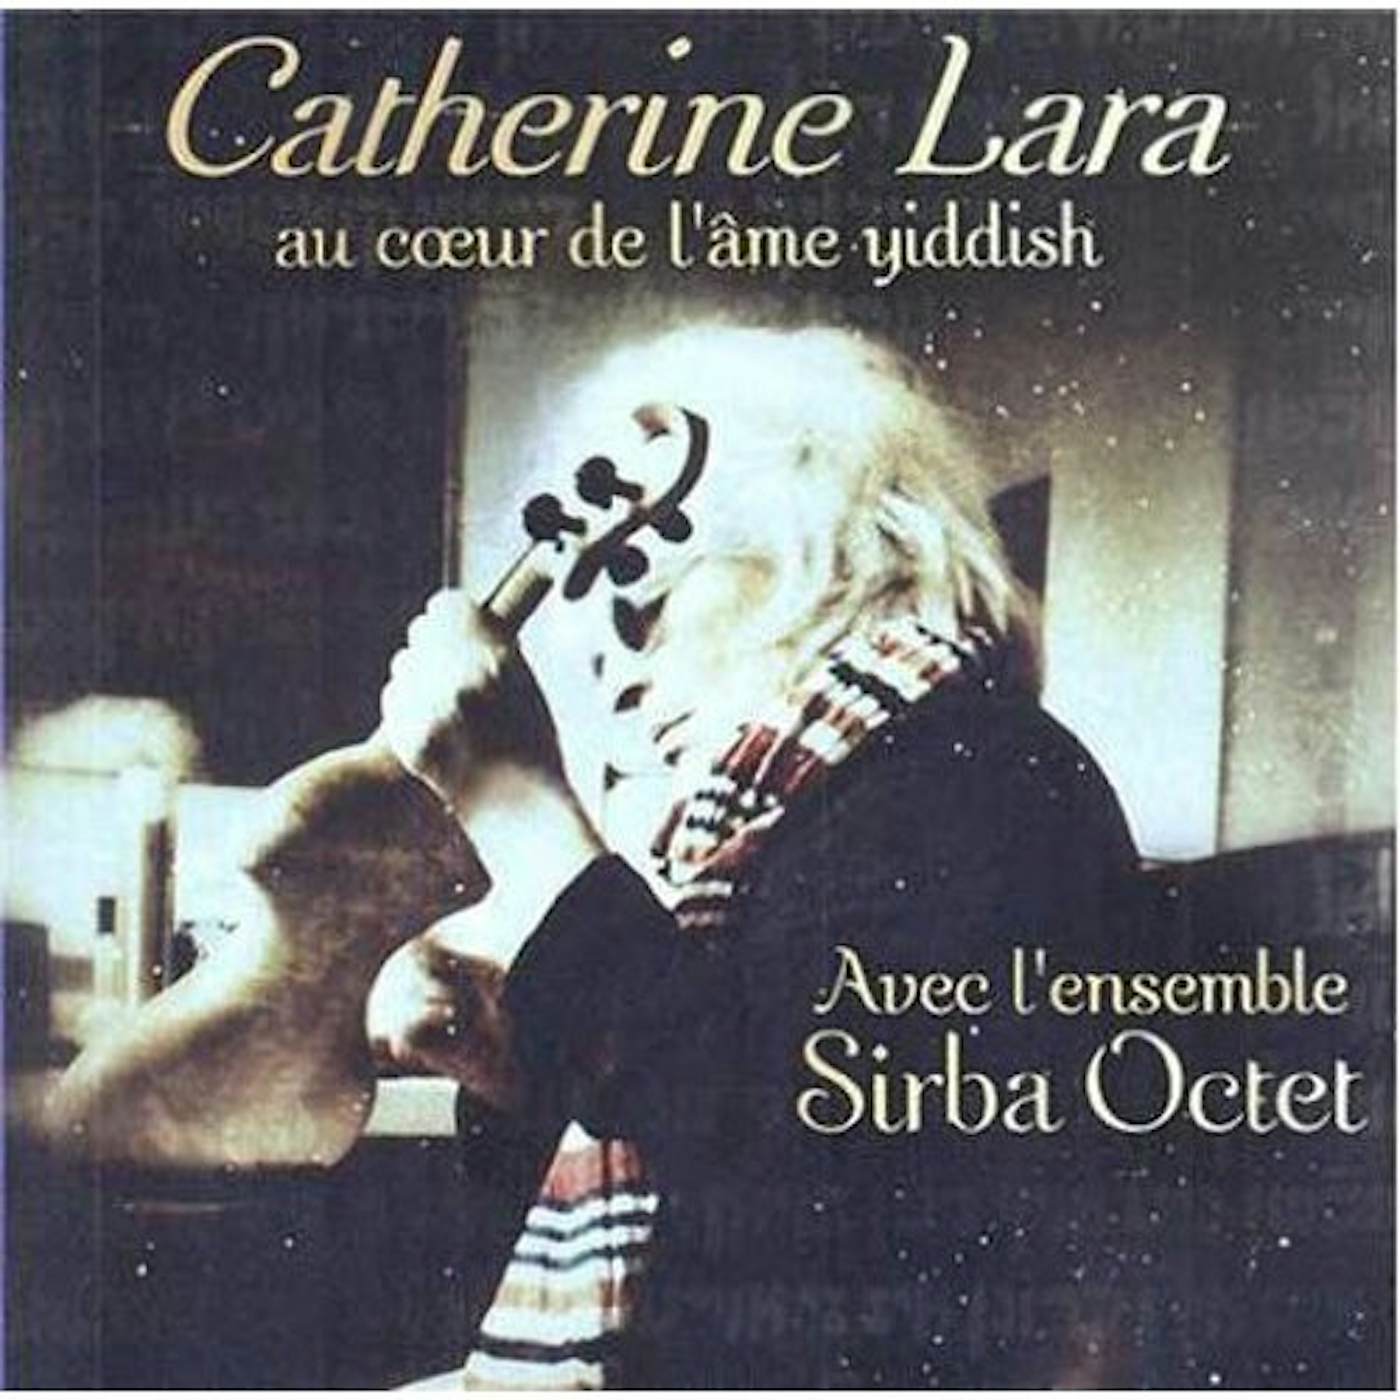 Catherine Lara AU COEUR DE L'AME YIDDISH CD